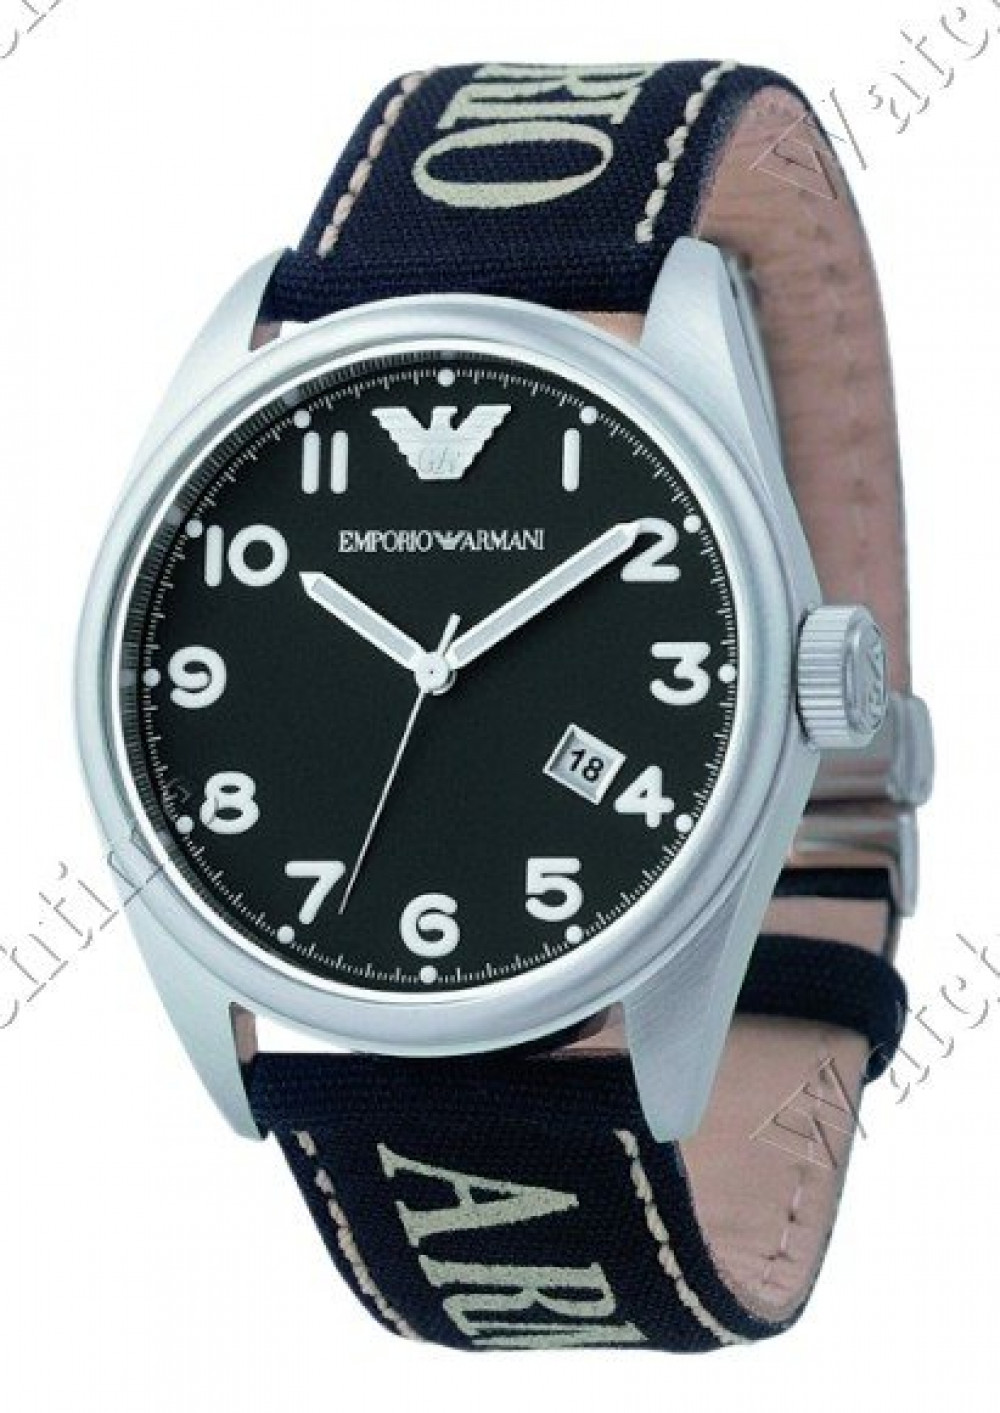 Zegarek firmy Emporio Armani, model 